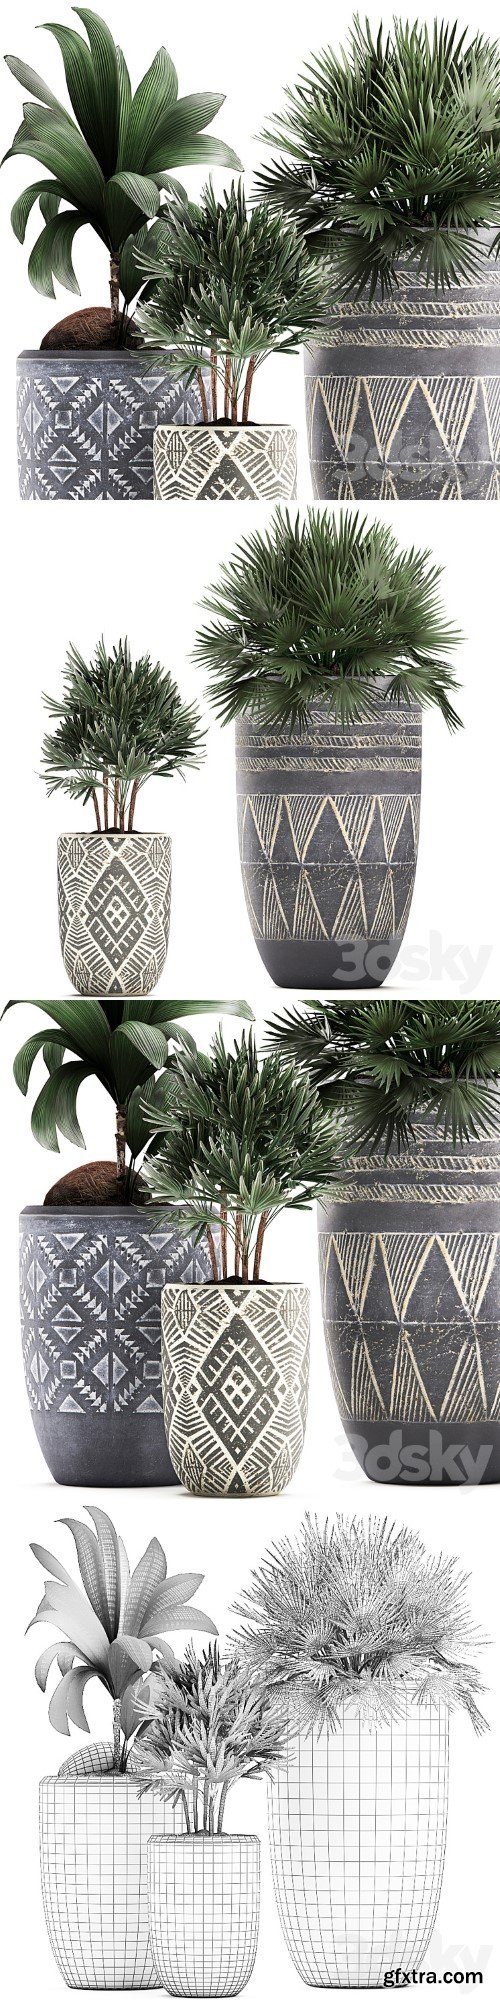 Plant Collection 475. coconut nucifera, fan palm, rapis, indoor plants, eco design, natural decor, indoor